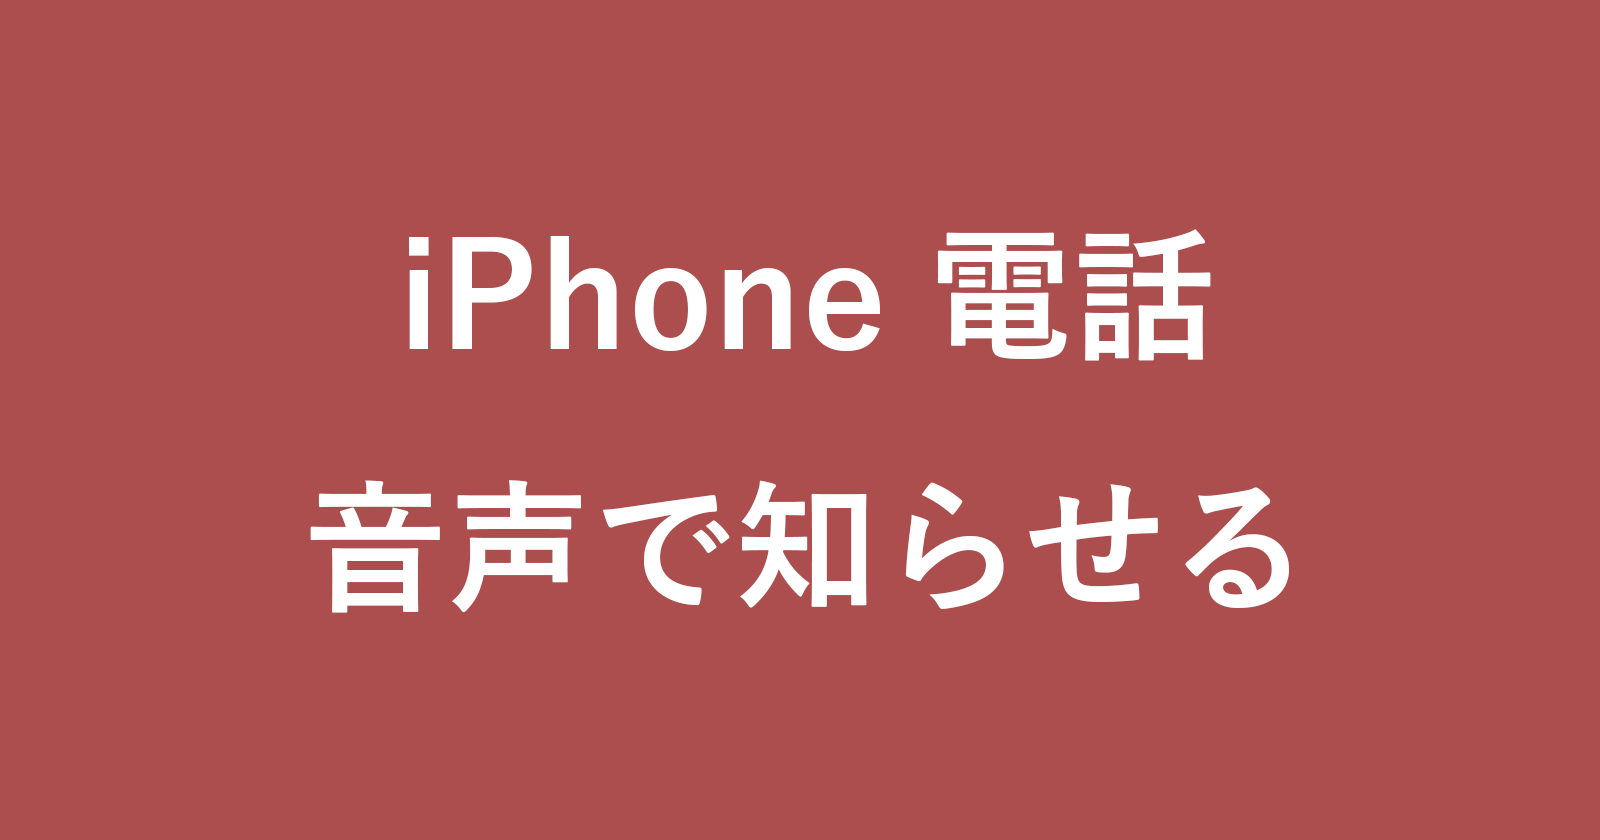 iphone calls announce